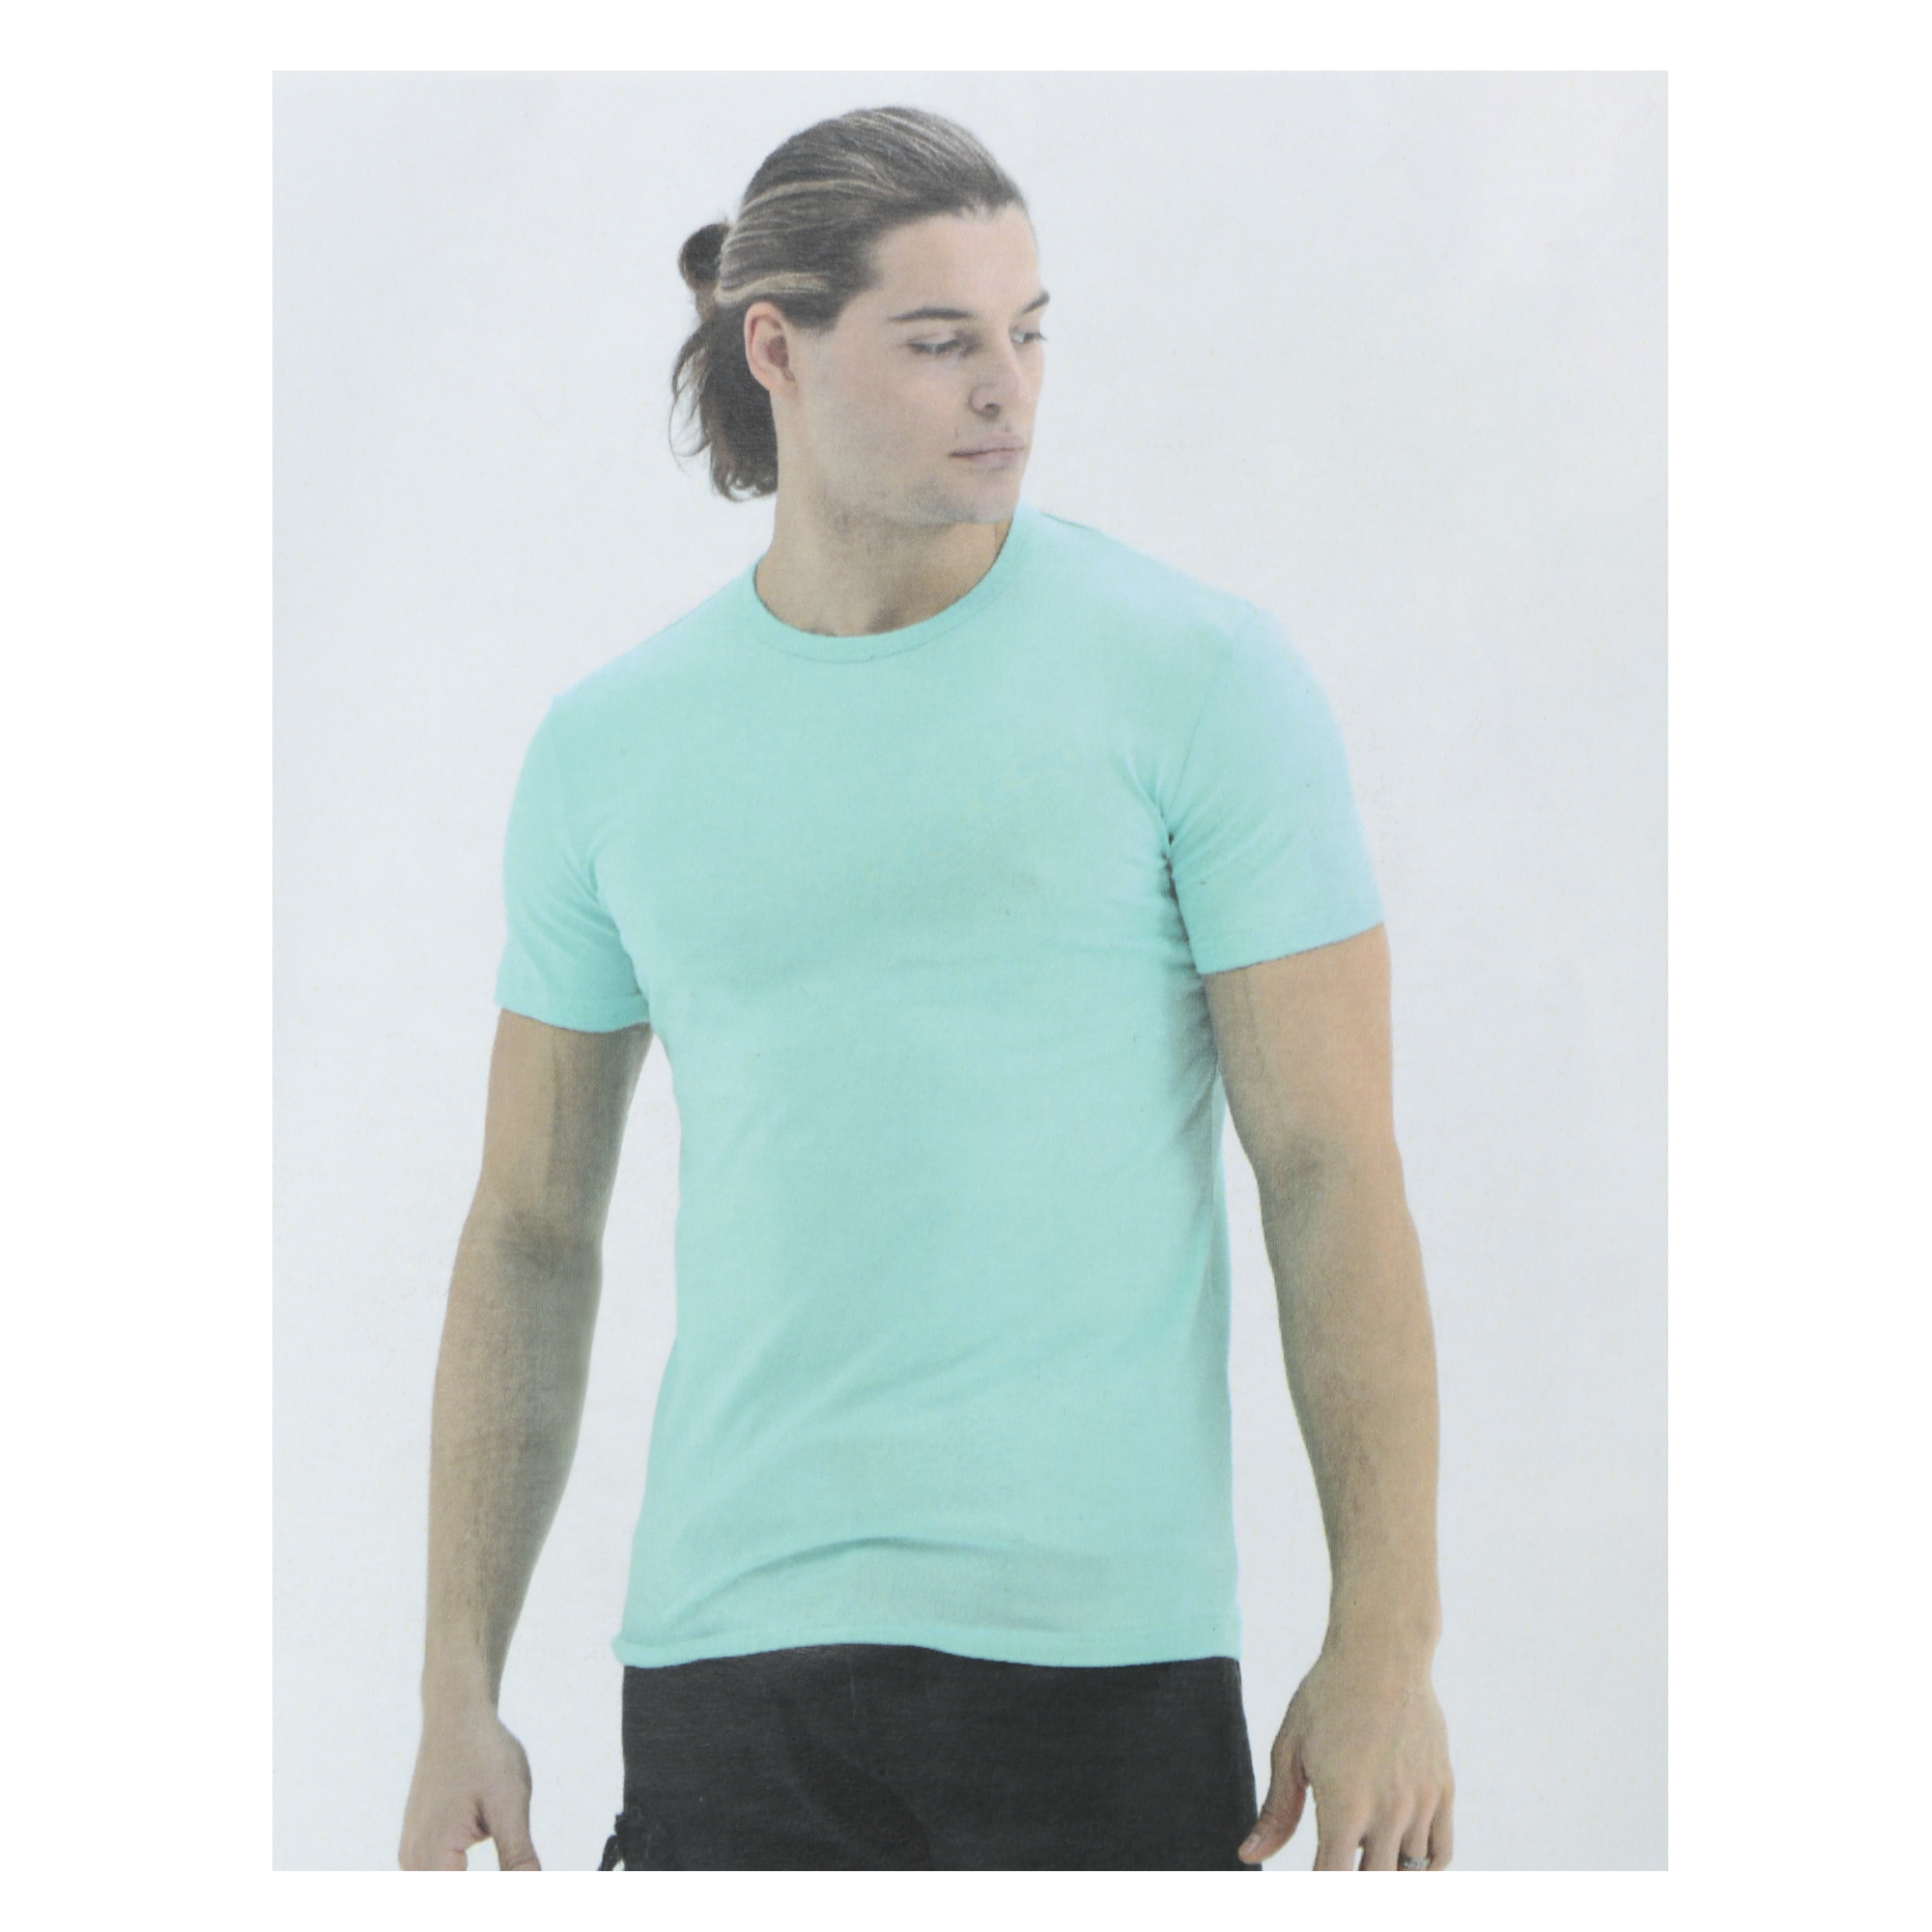 Мужская футболка Pantelemone MF-913 52 ментоловая, цвет ментоловый, размер 52 - фото 2